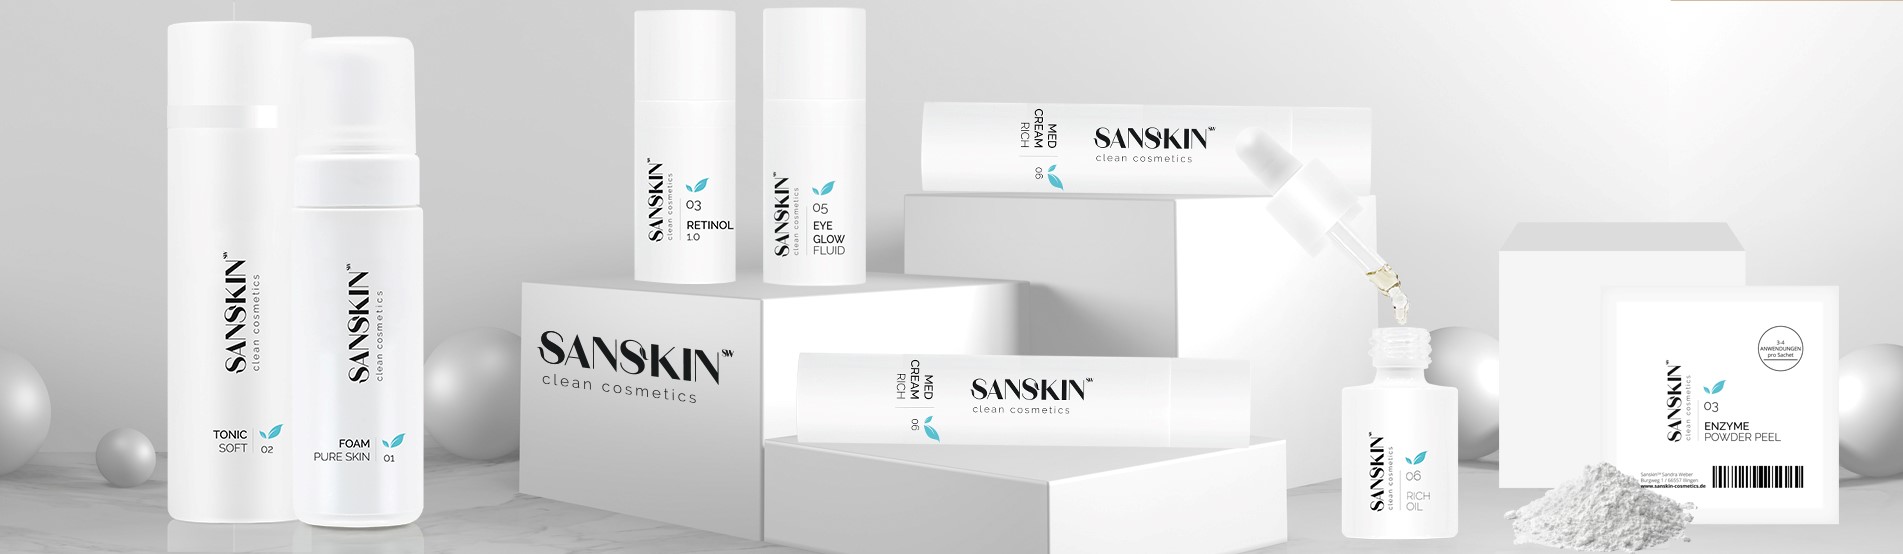 sanskin - clean cosmetics